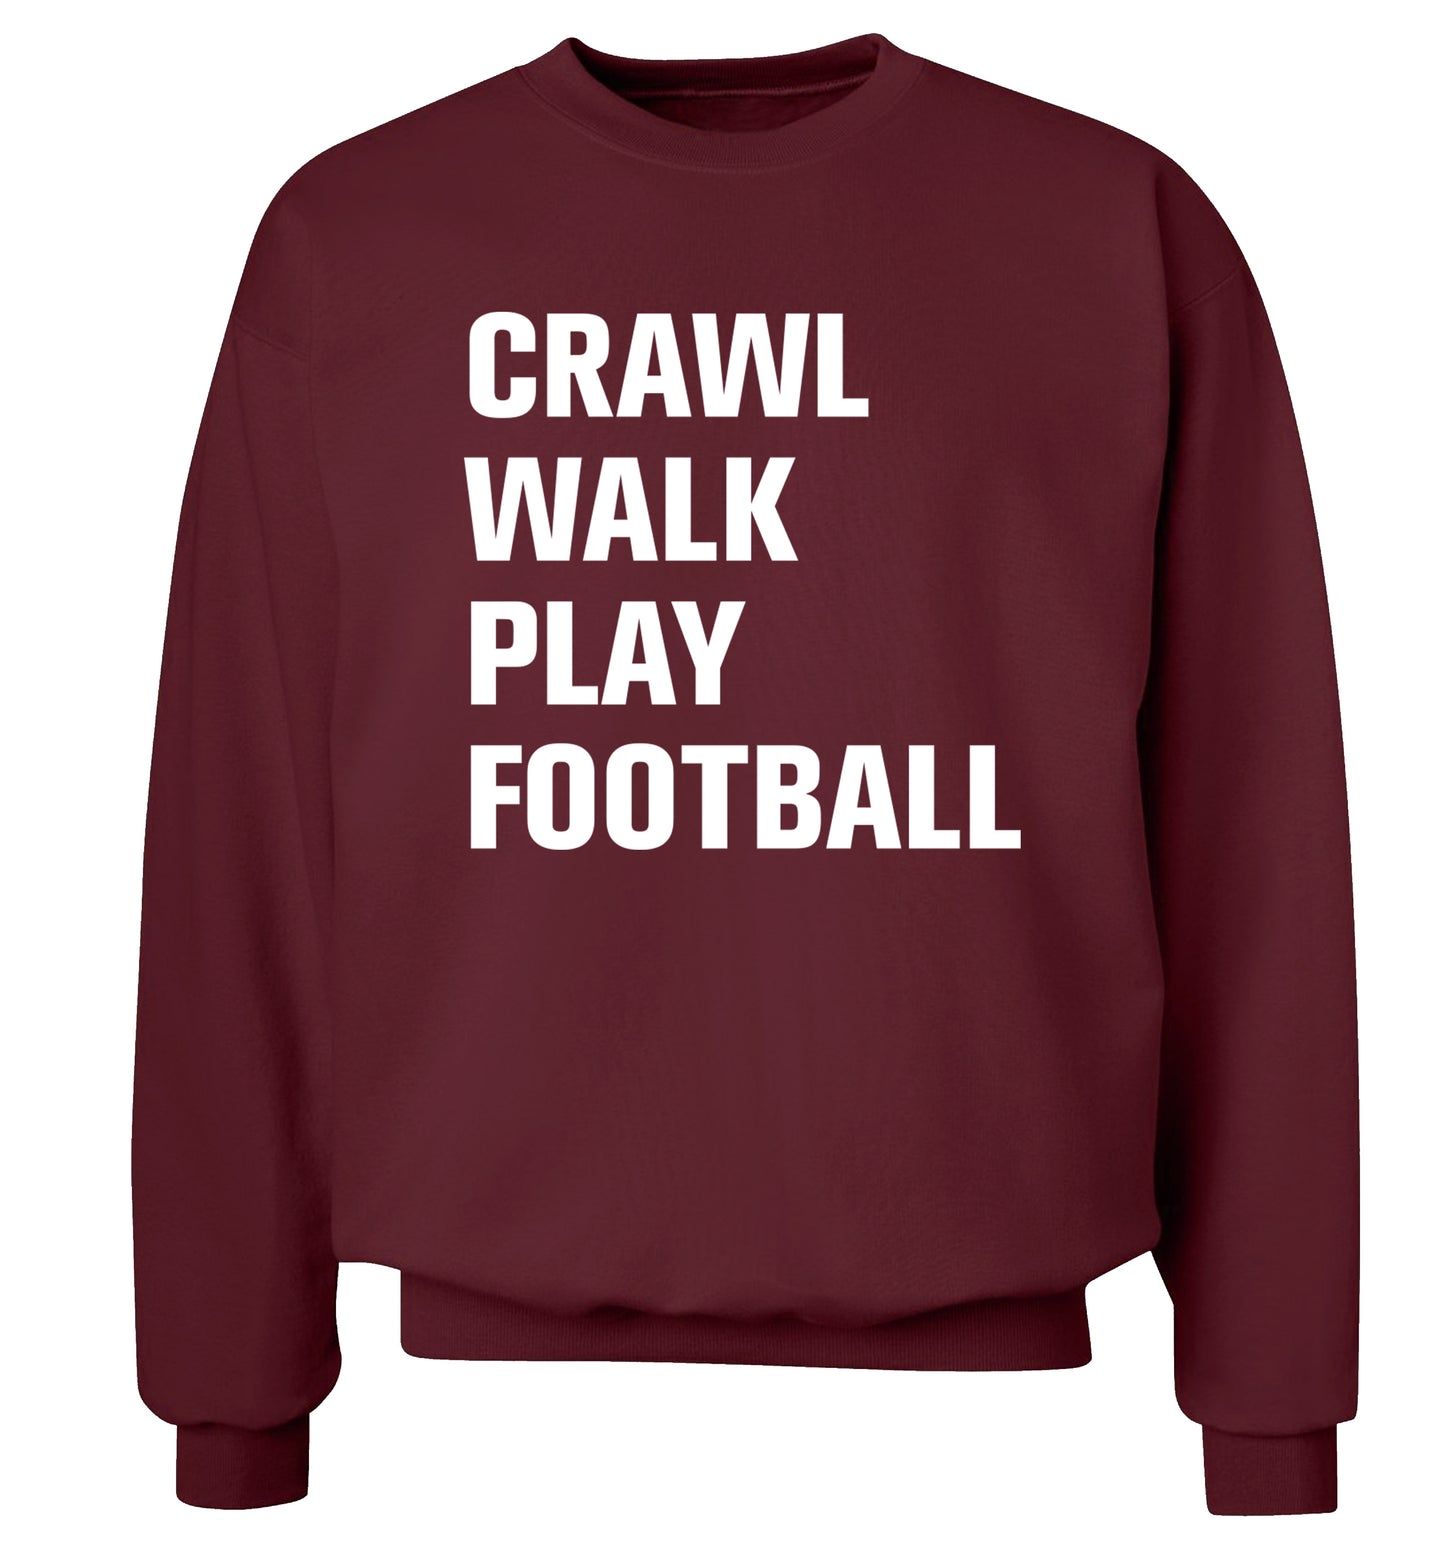 Crawl, walk, play football Adult's unisex maroon Sweater 2XL